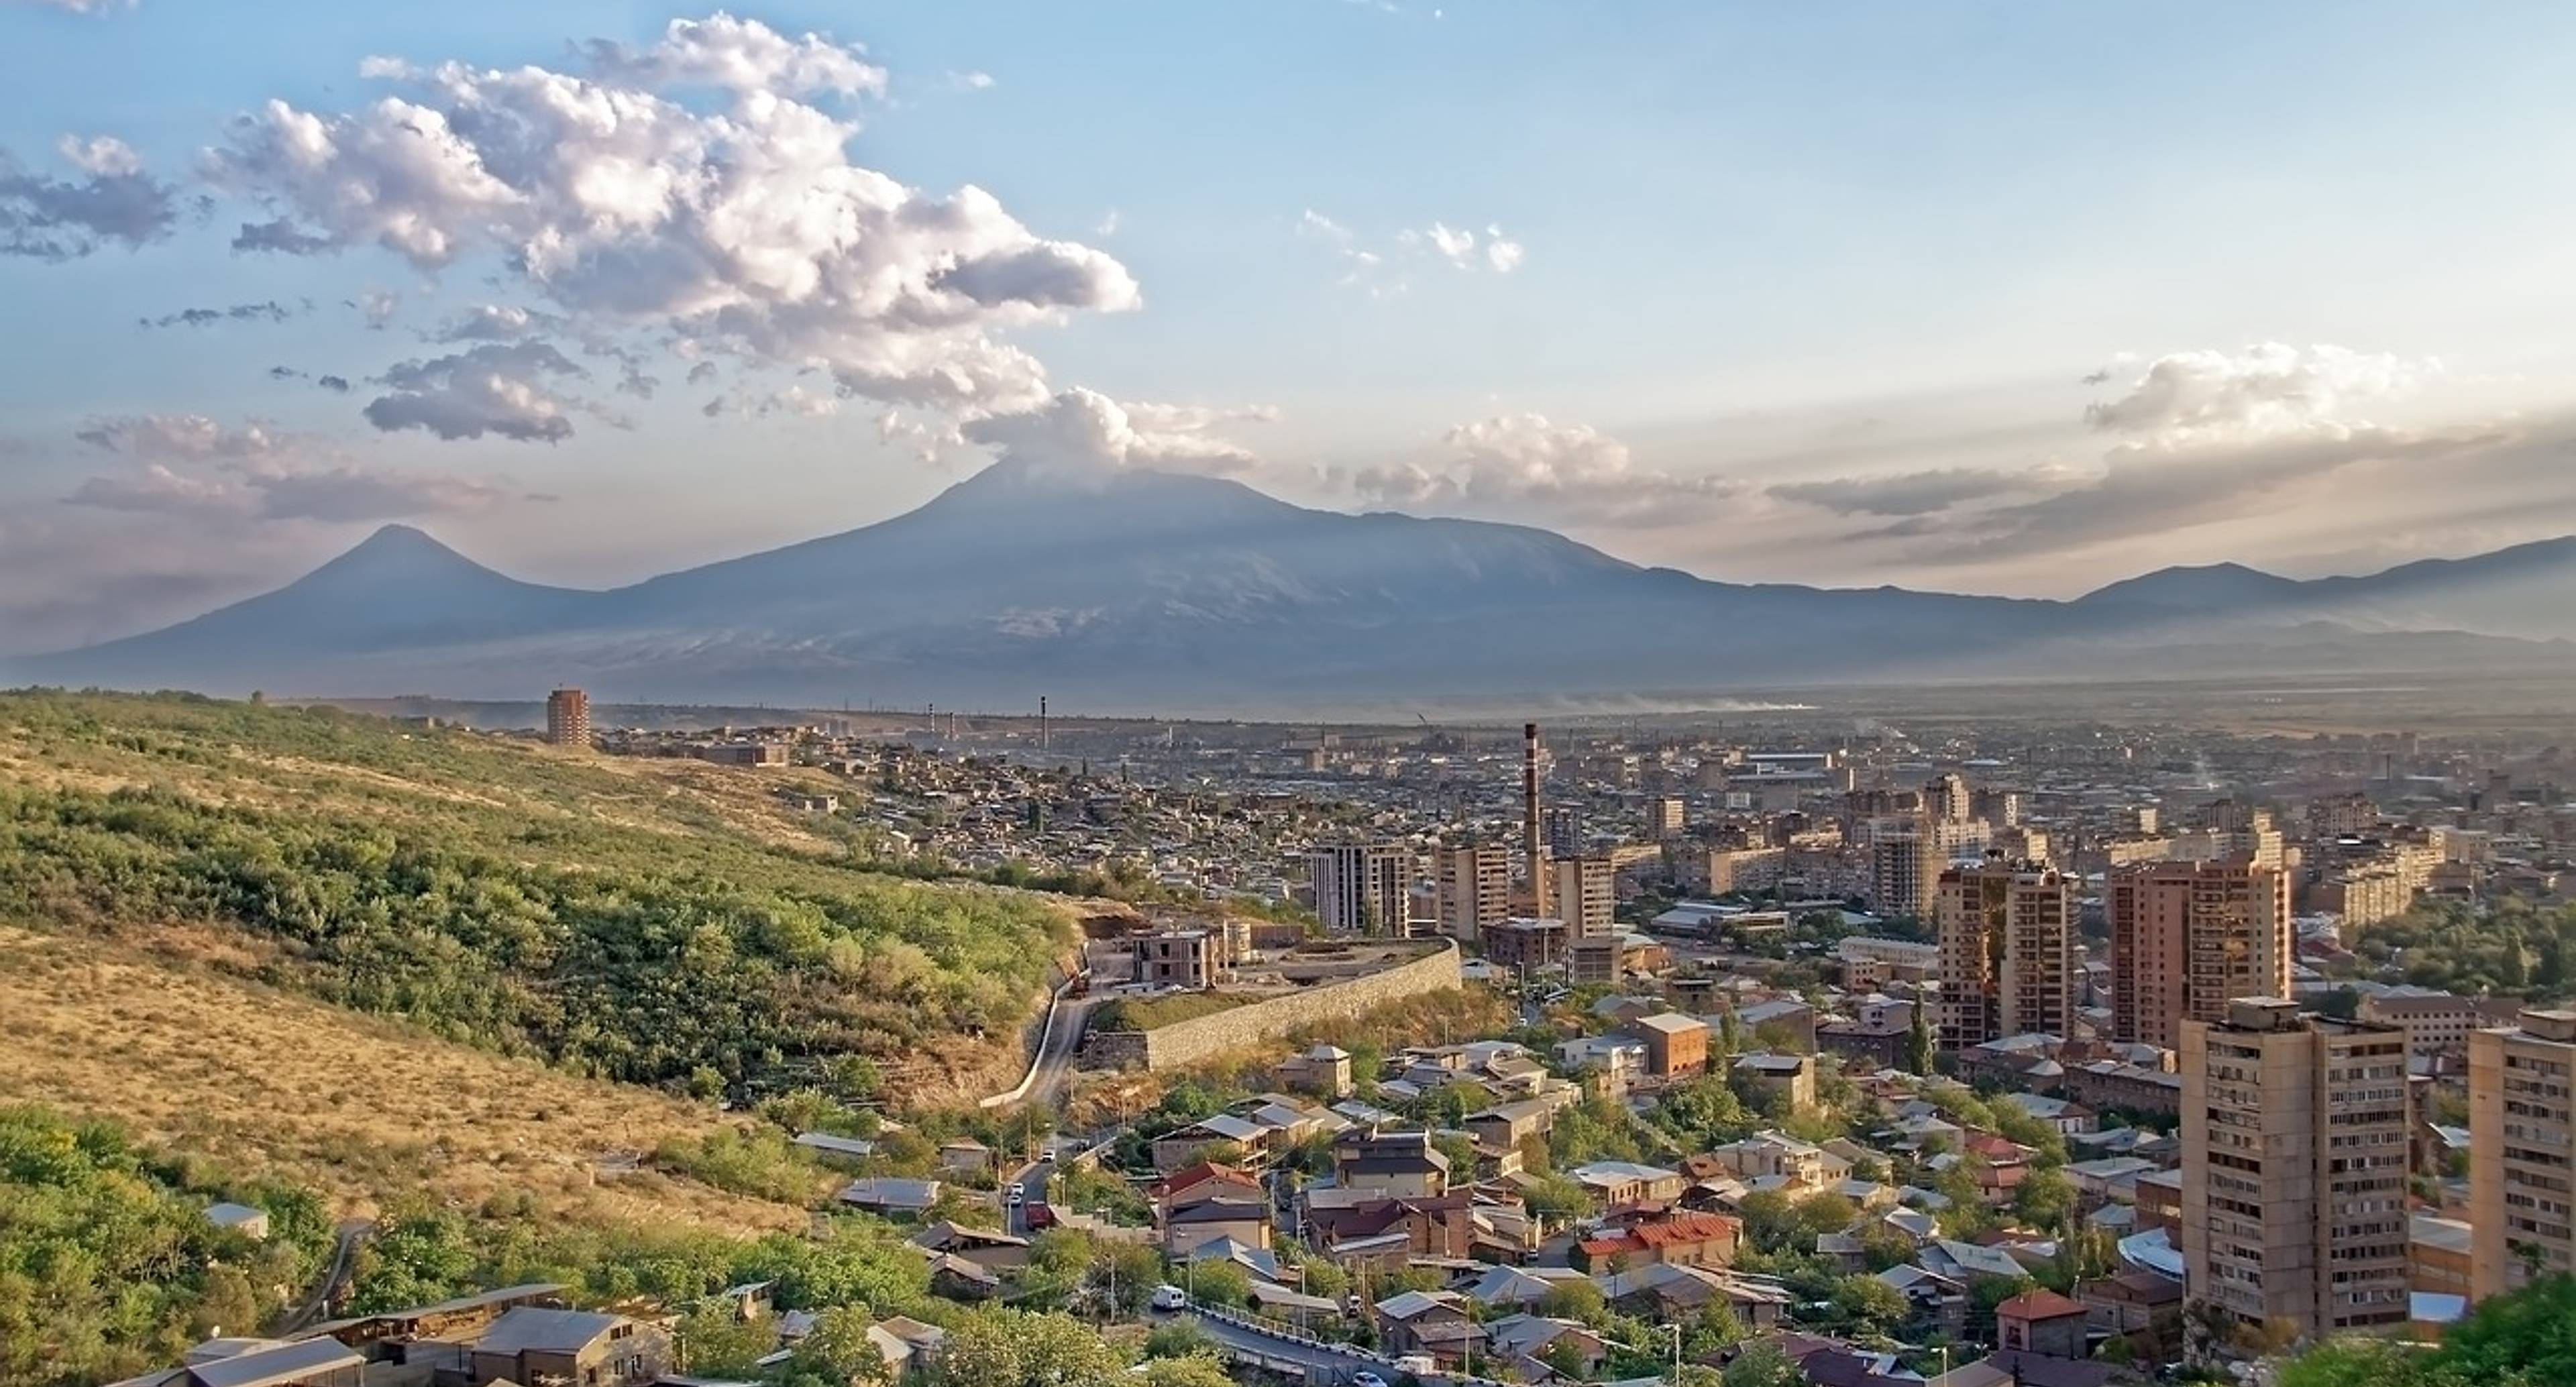 Arrival in Yerevan